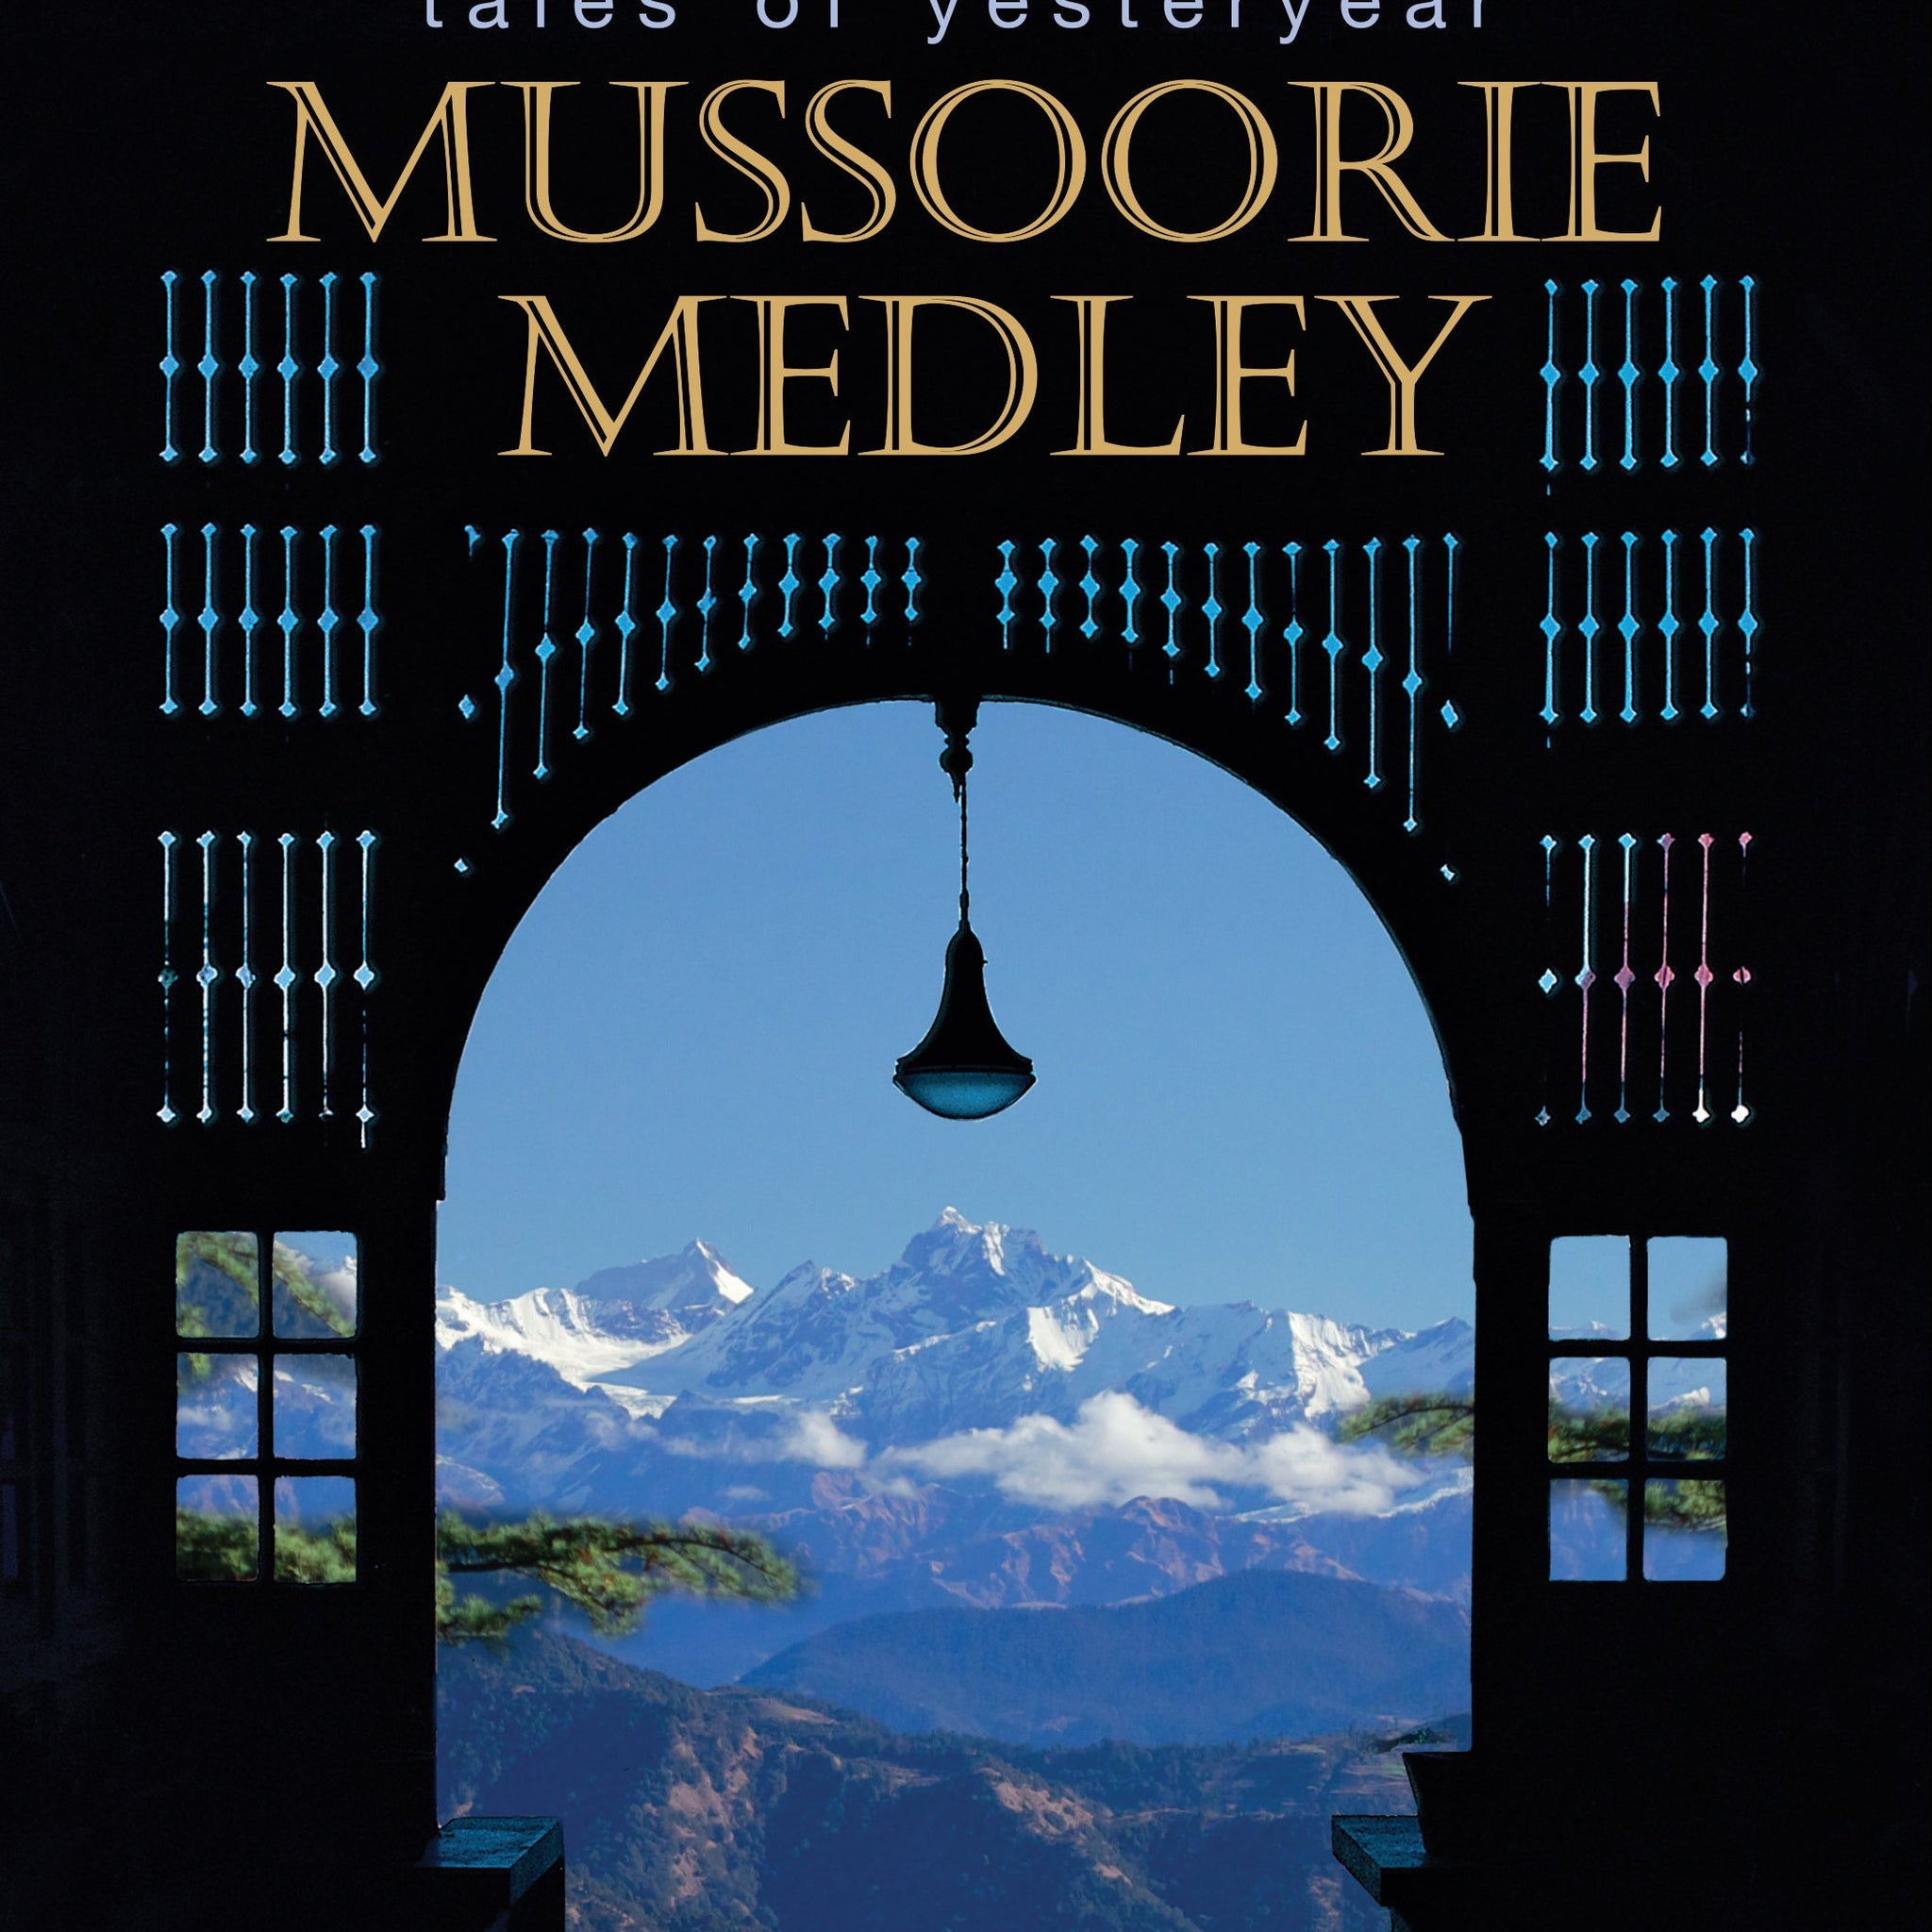 Mussoorie Medley: Tales of Yesteryear